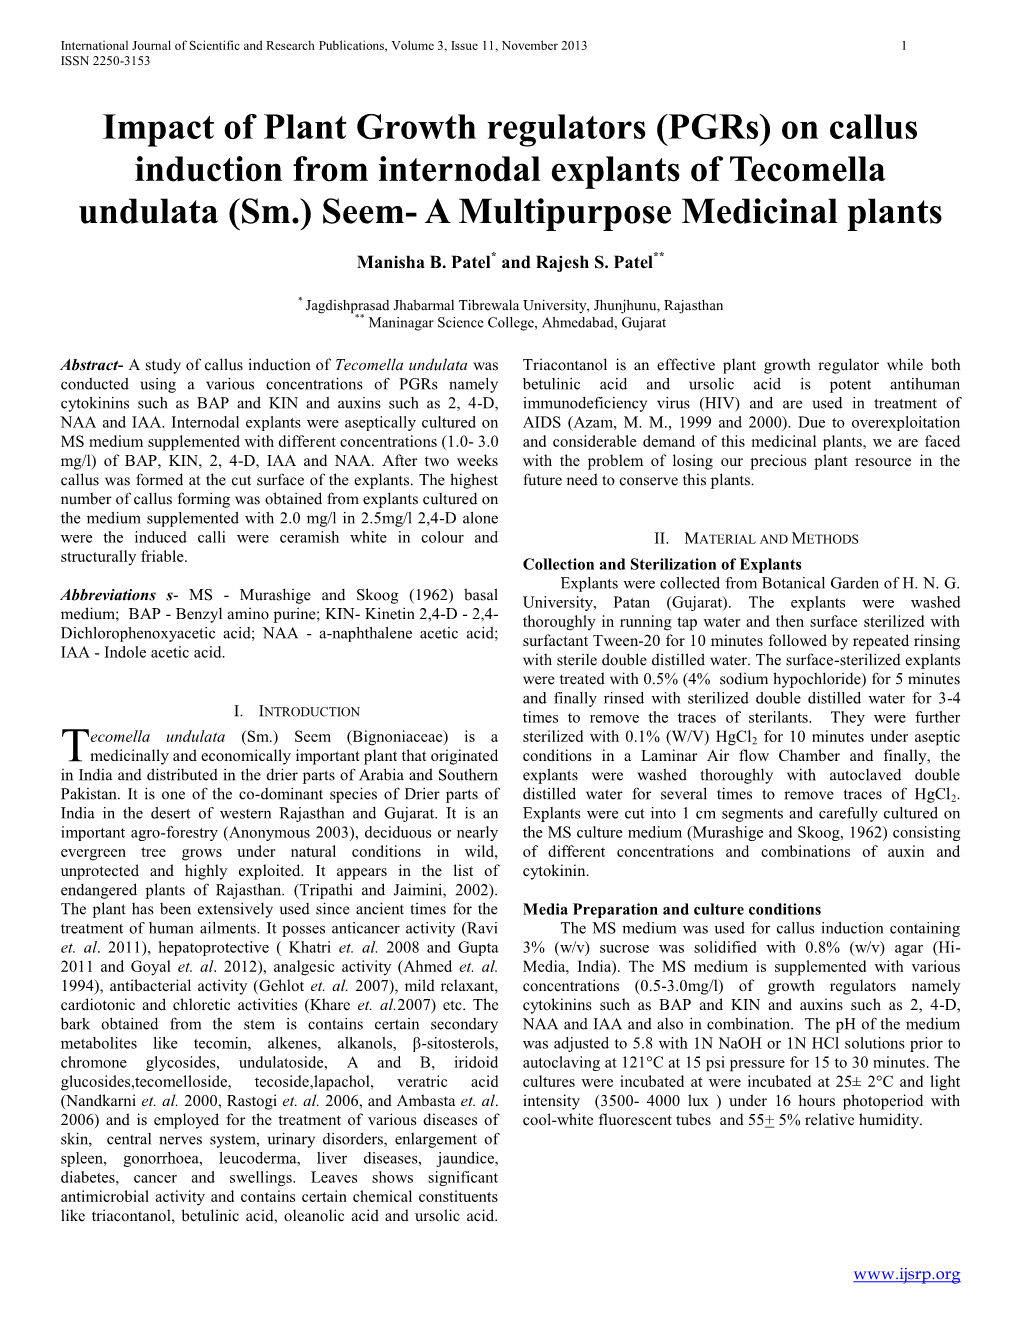 On Callus Induction from Internodal Explants of Tecomella Undulata (Sm.) Seem- a Multipurpose Medicinal Plants